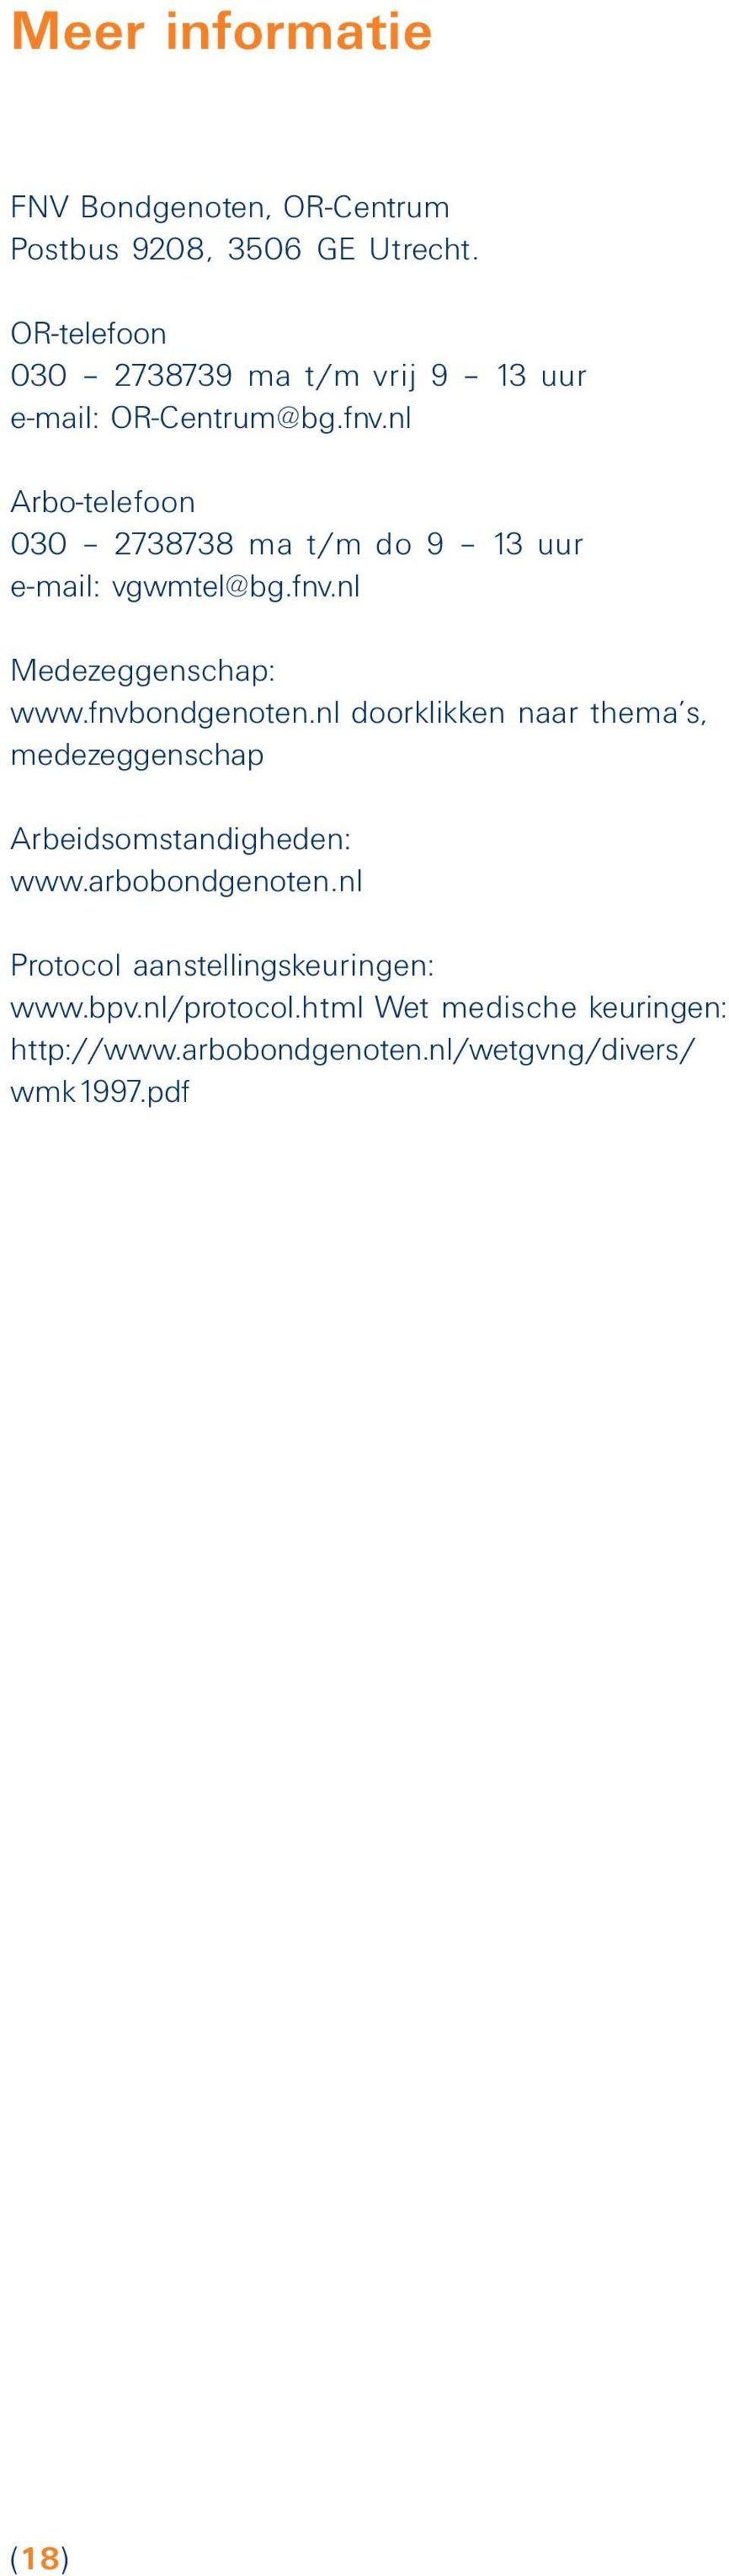 nl Arbo-telefoon 030 2738738 ma t/m do 9 13 uur e-mail: vgwmtel@bg.fnv.nl Medezeggenschap: www.fnvbondgenoten.